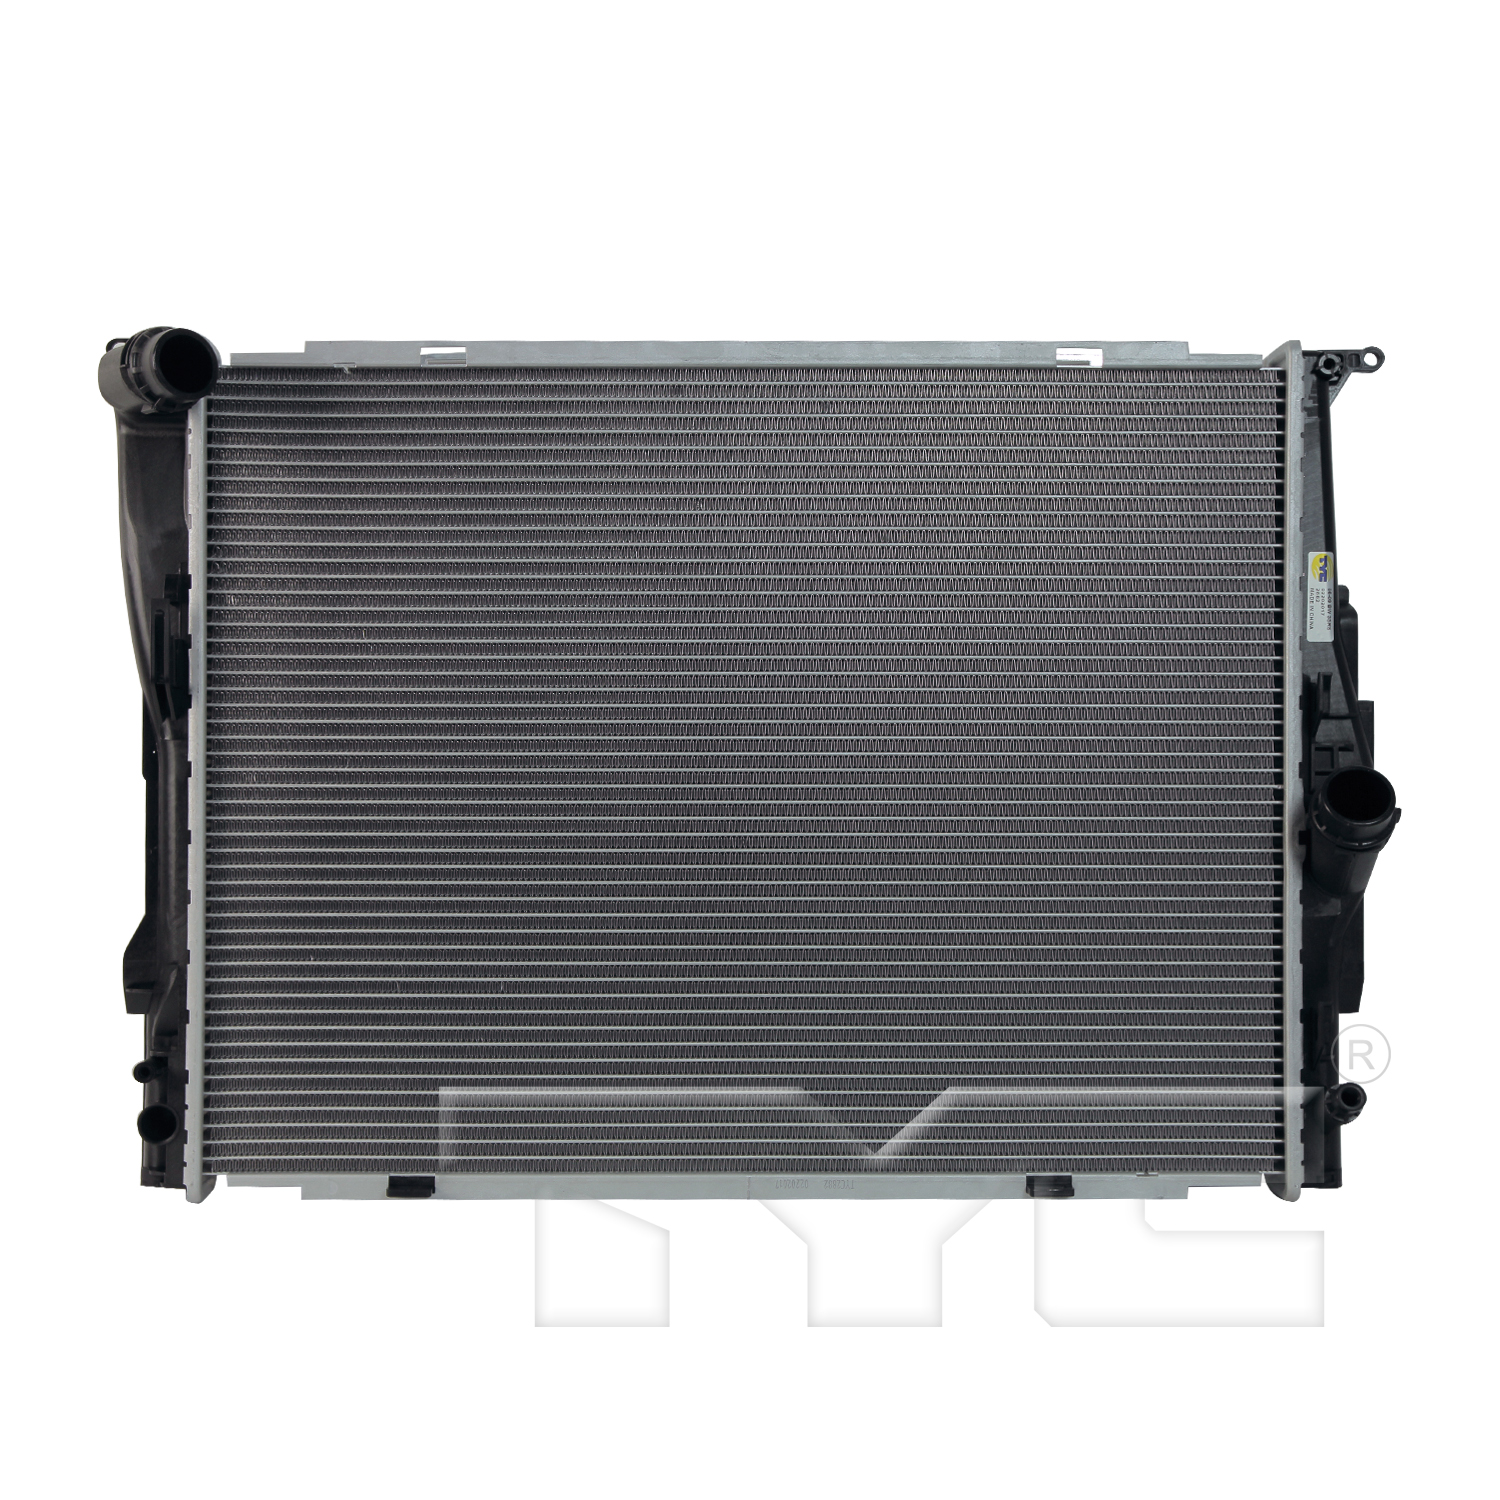 Aftermarket RADIATORS for BMW - Z4, Z4,09-16,Cooling module